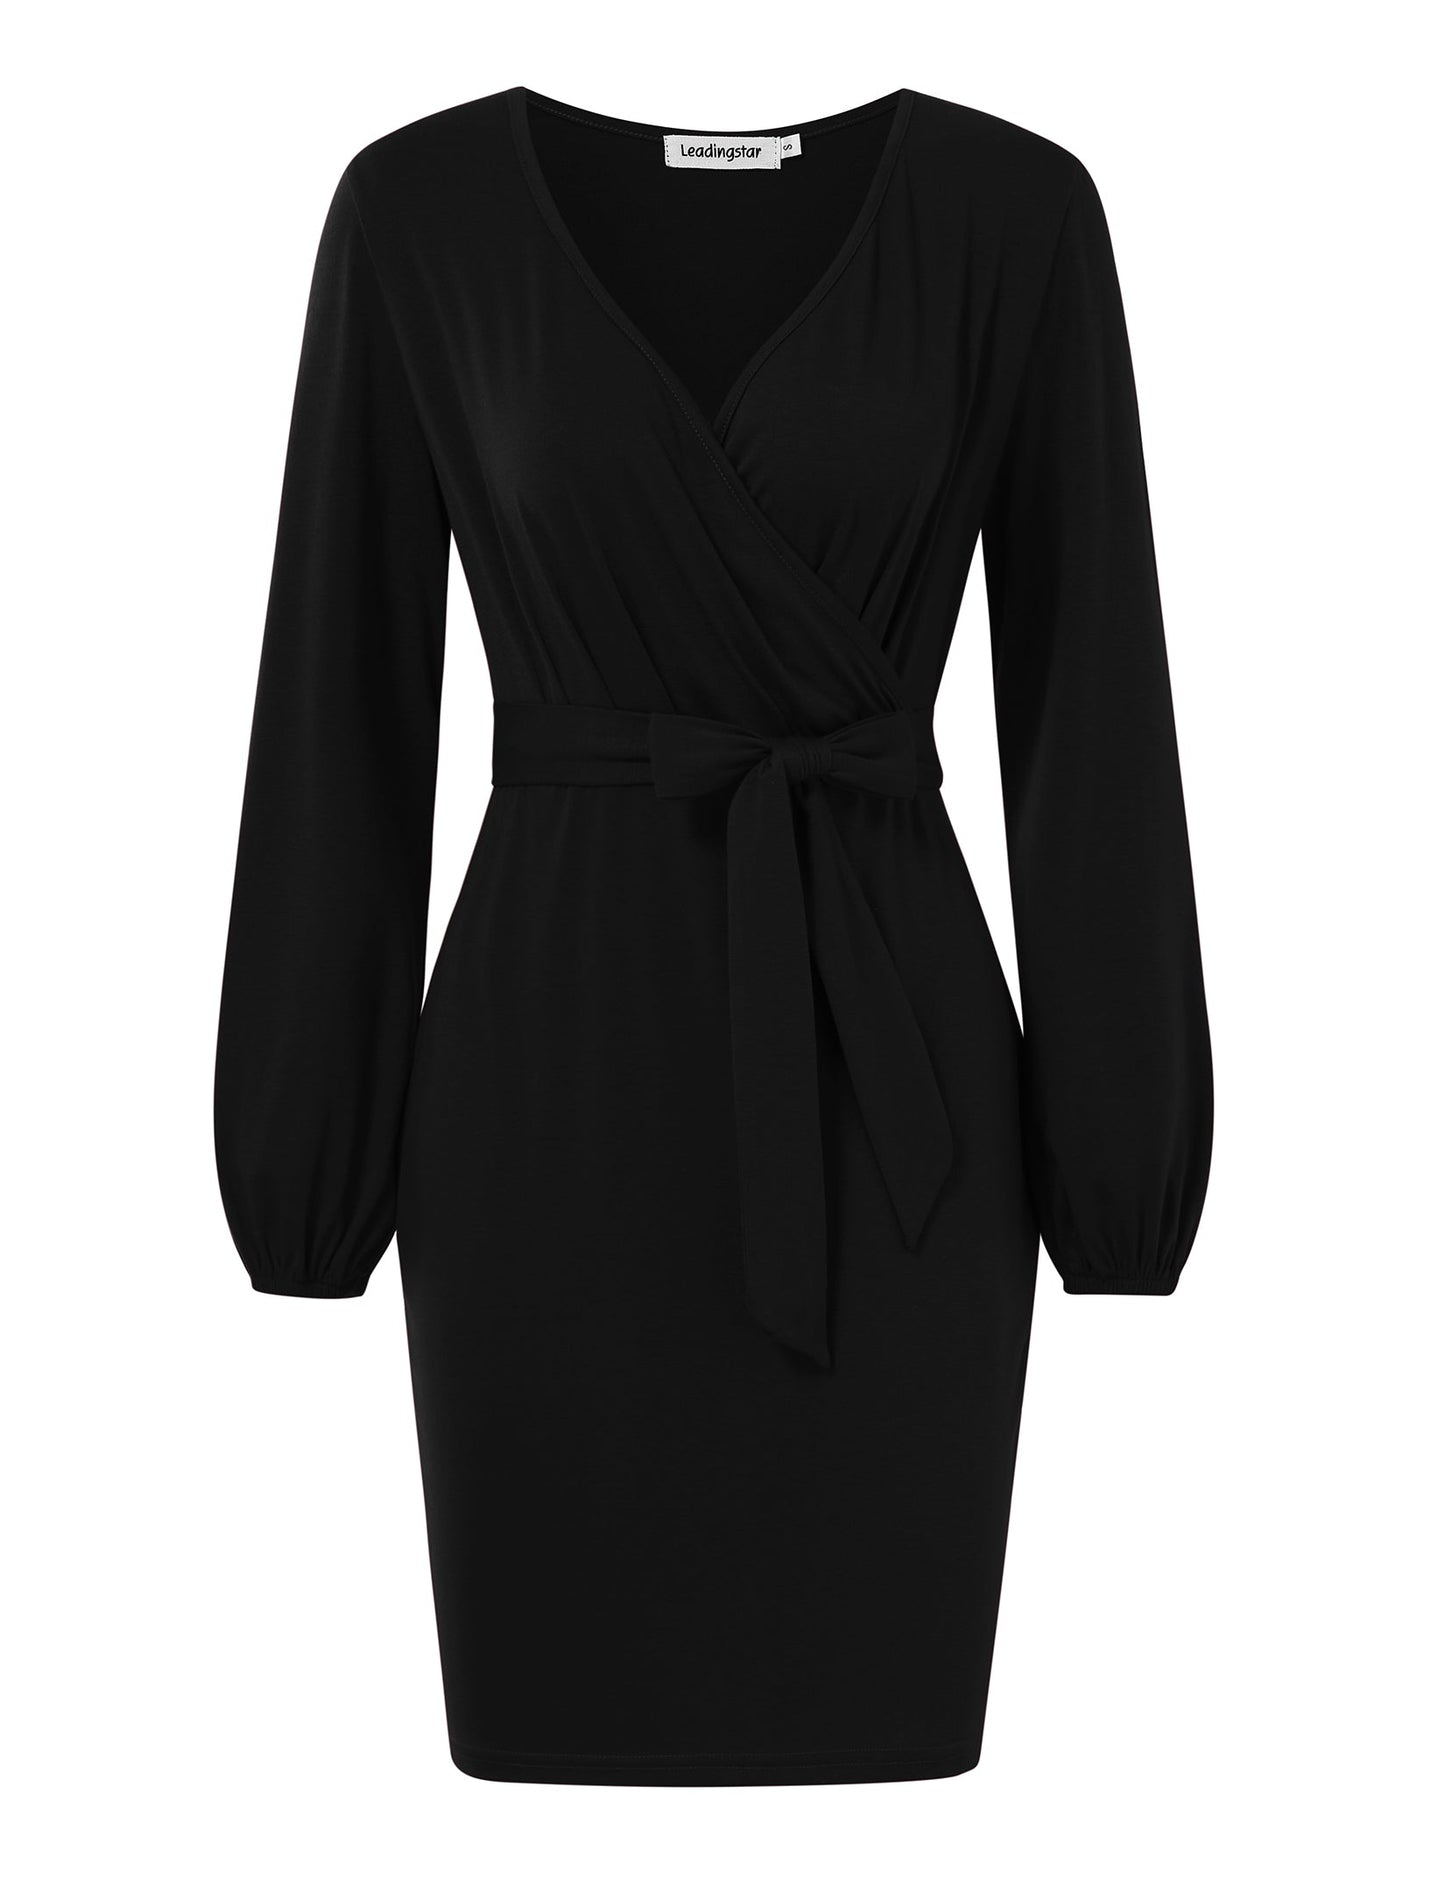 YESFASHION Women's V Neck Long Sleeves Dress Slim Party Dress Black